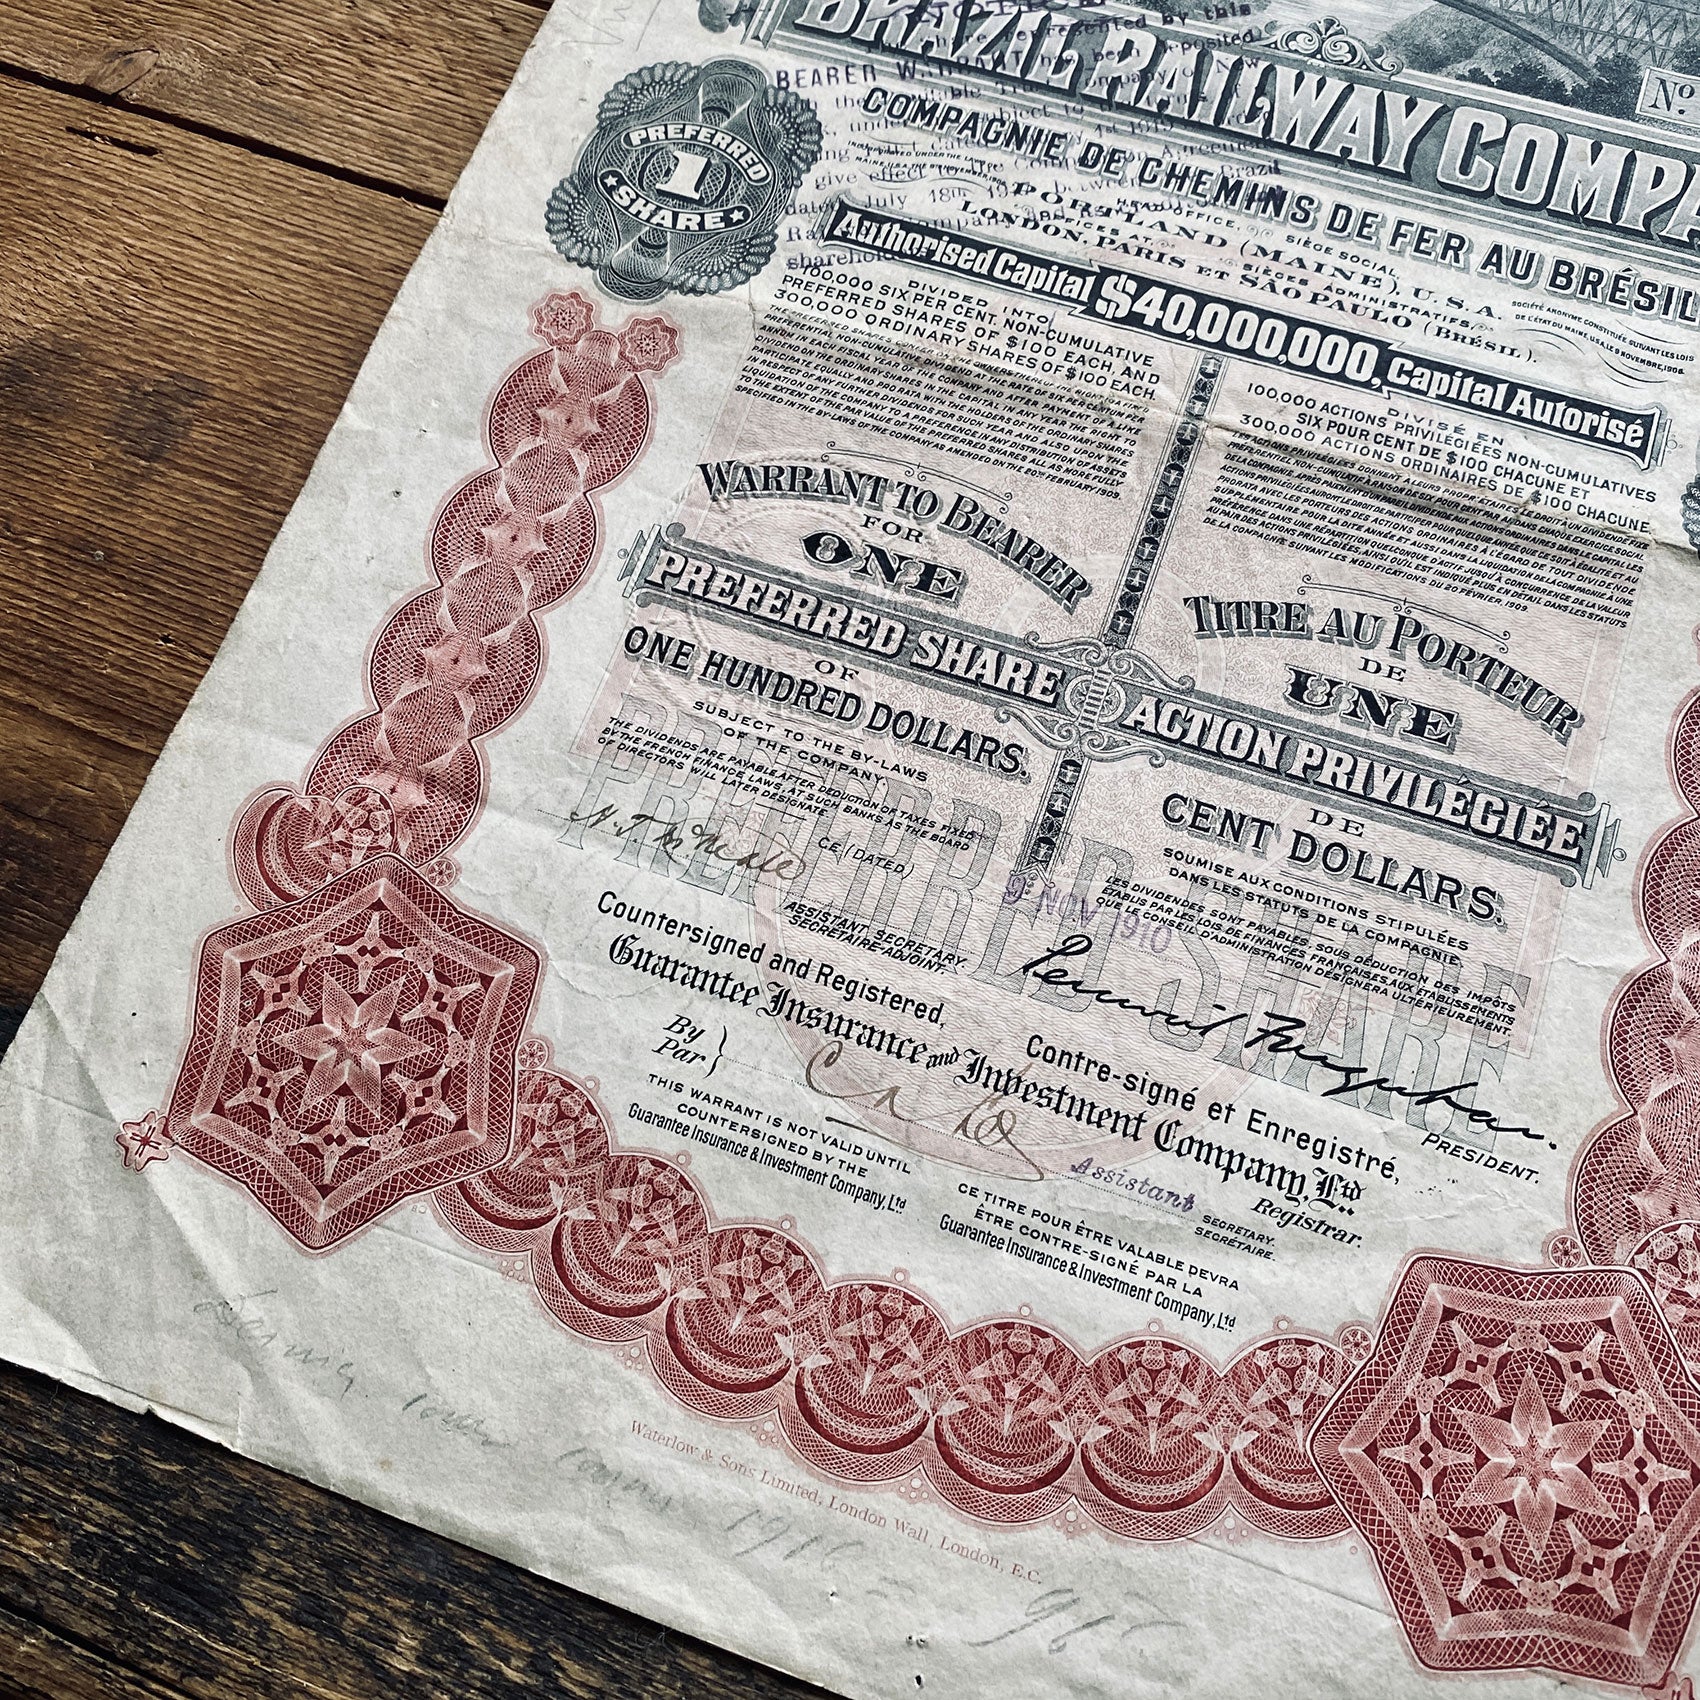 Brazil Railway Company Share Certificate - 1912